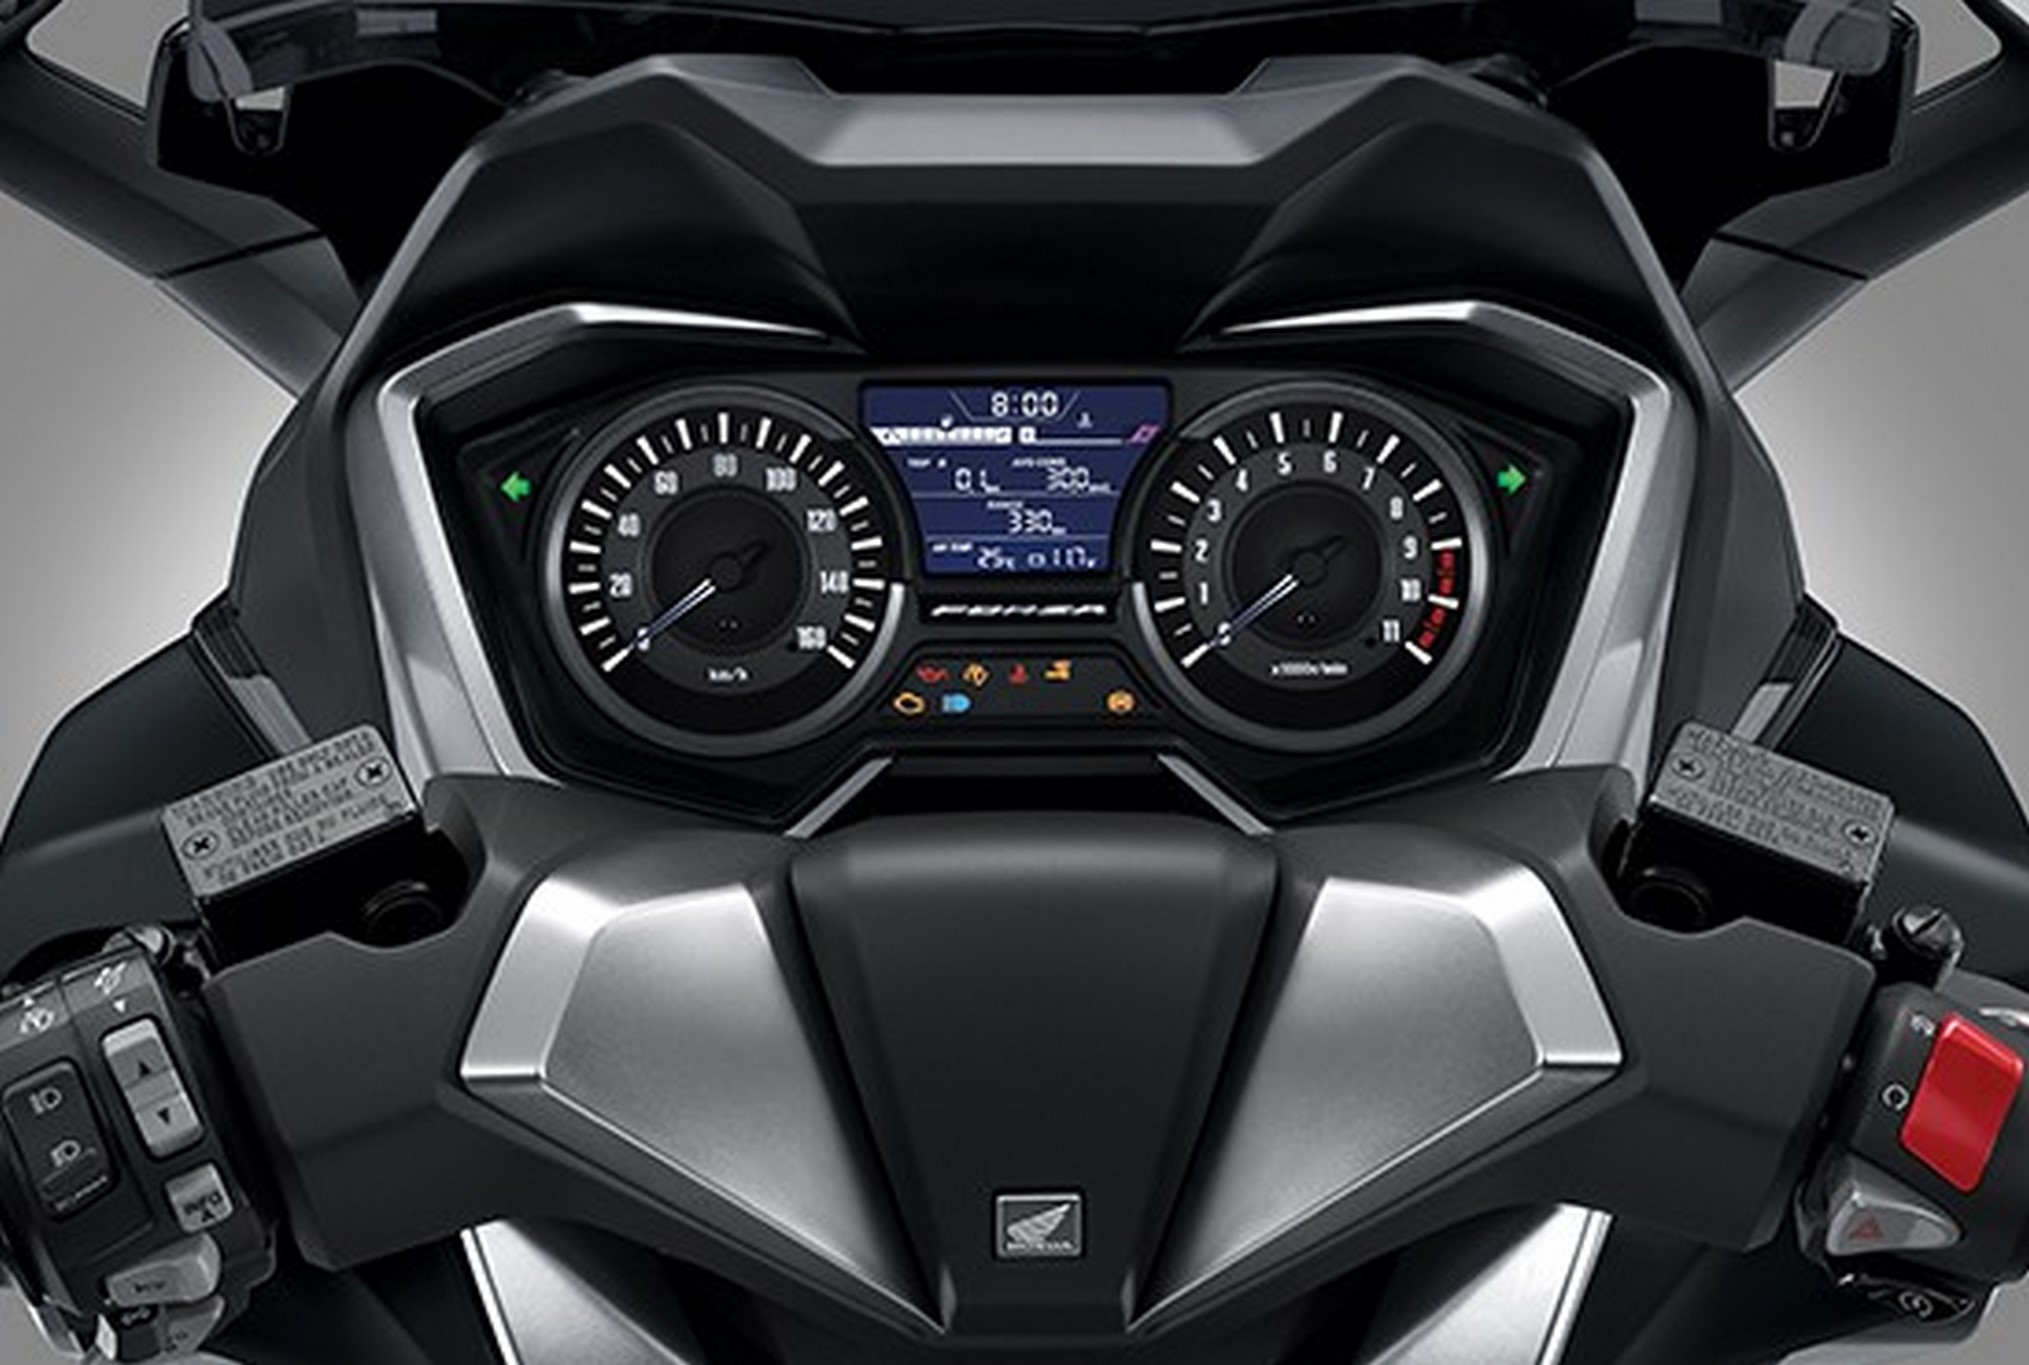 Honda Forza 350 (2021) - Review